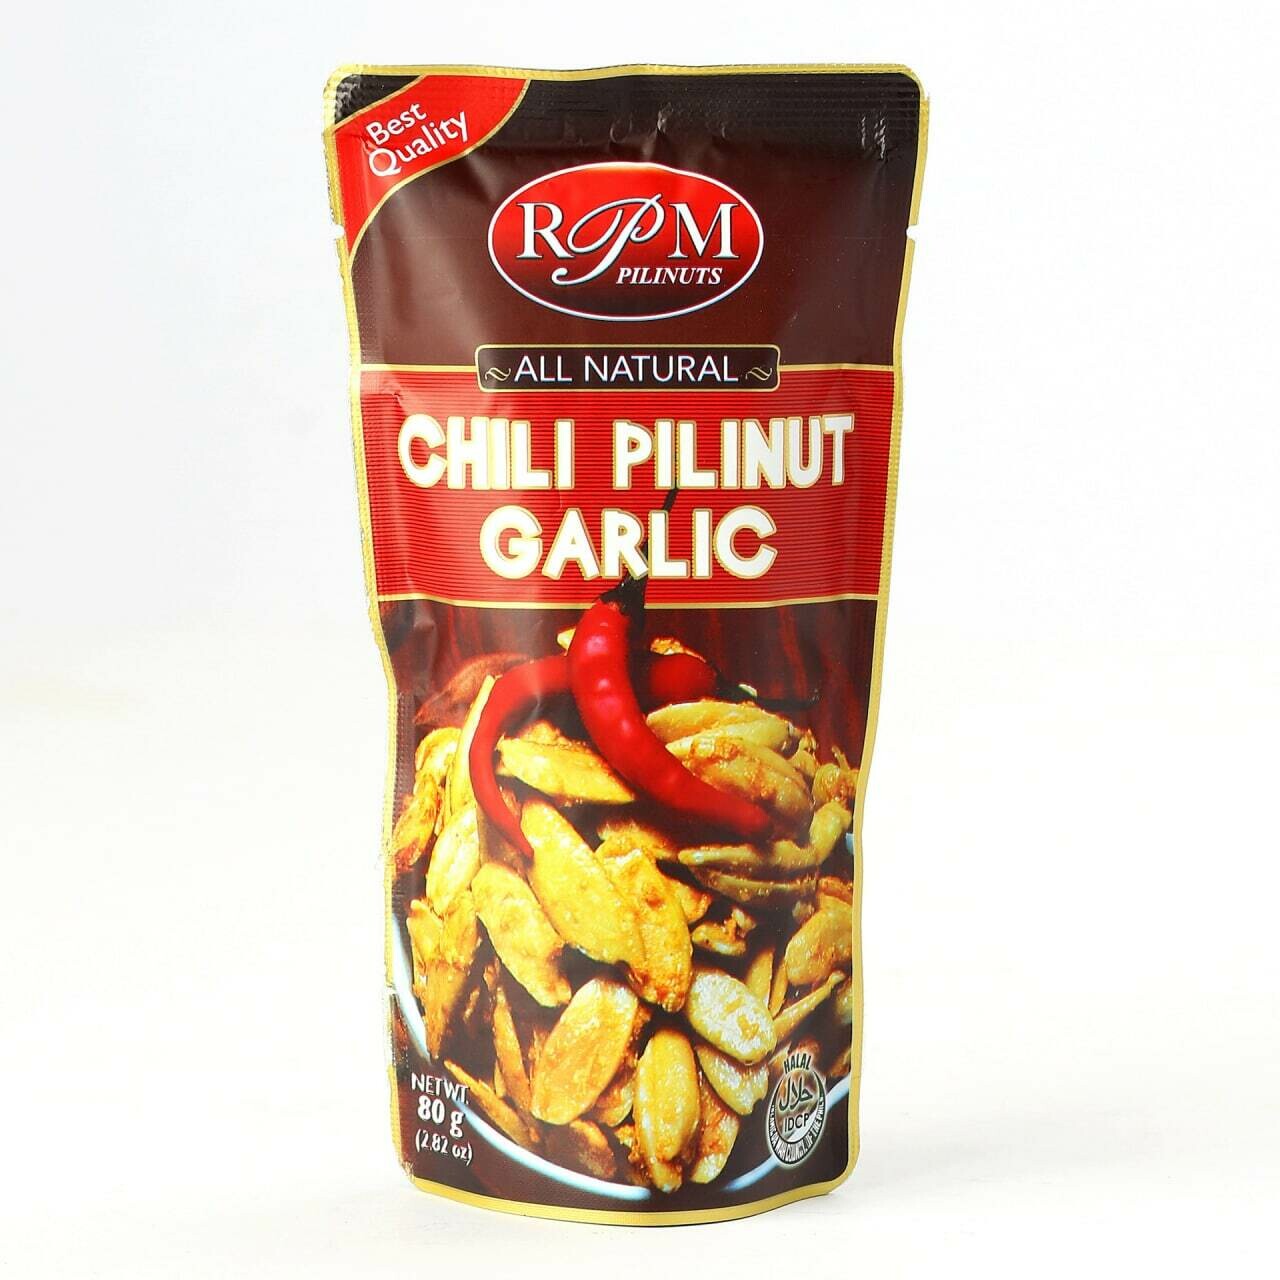 RPM Pili Nuts - Chili Pili Nut Garlic